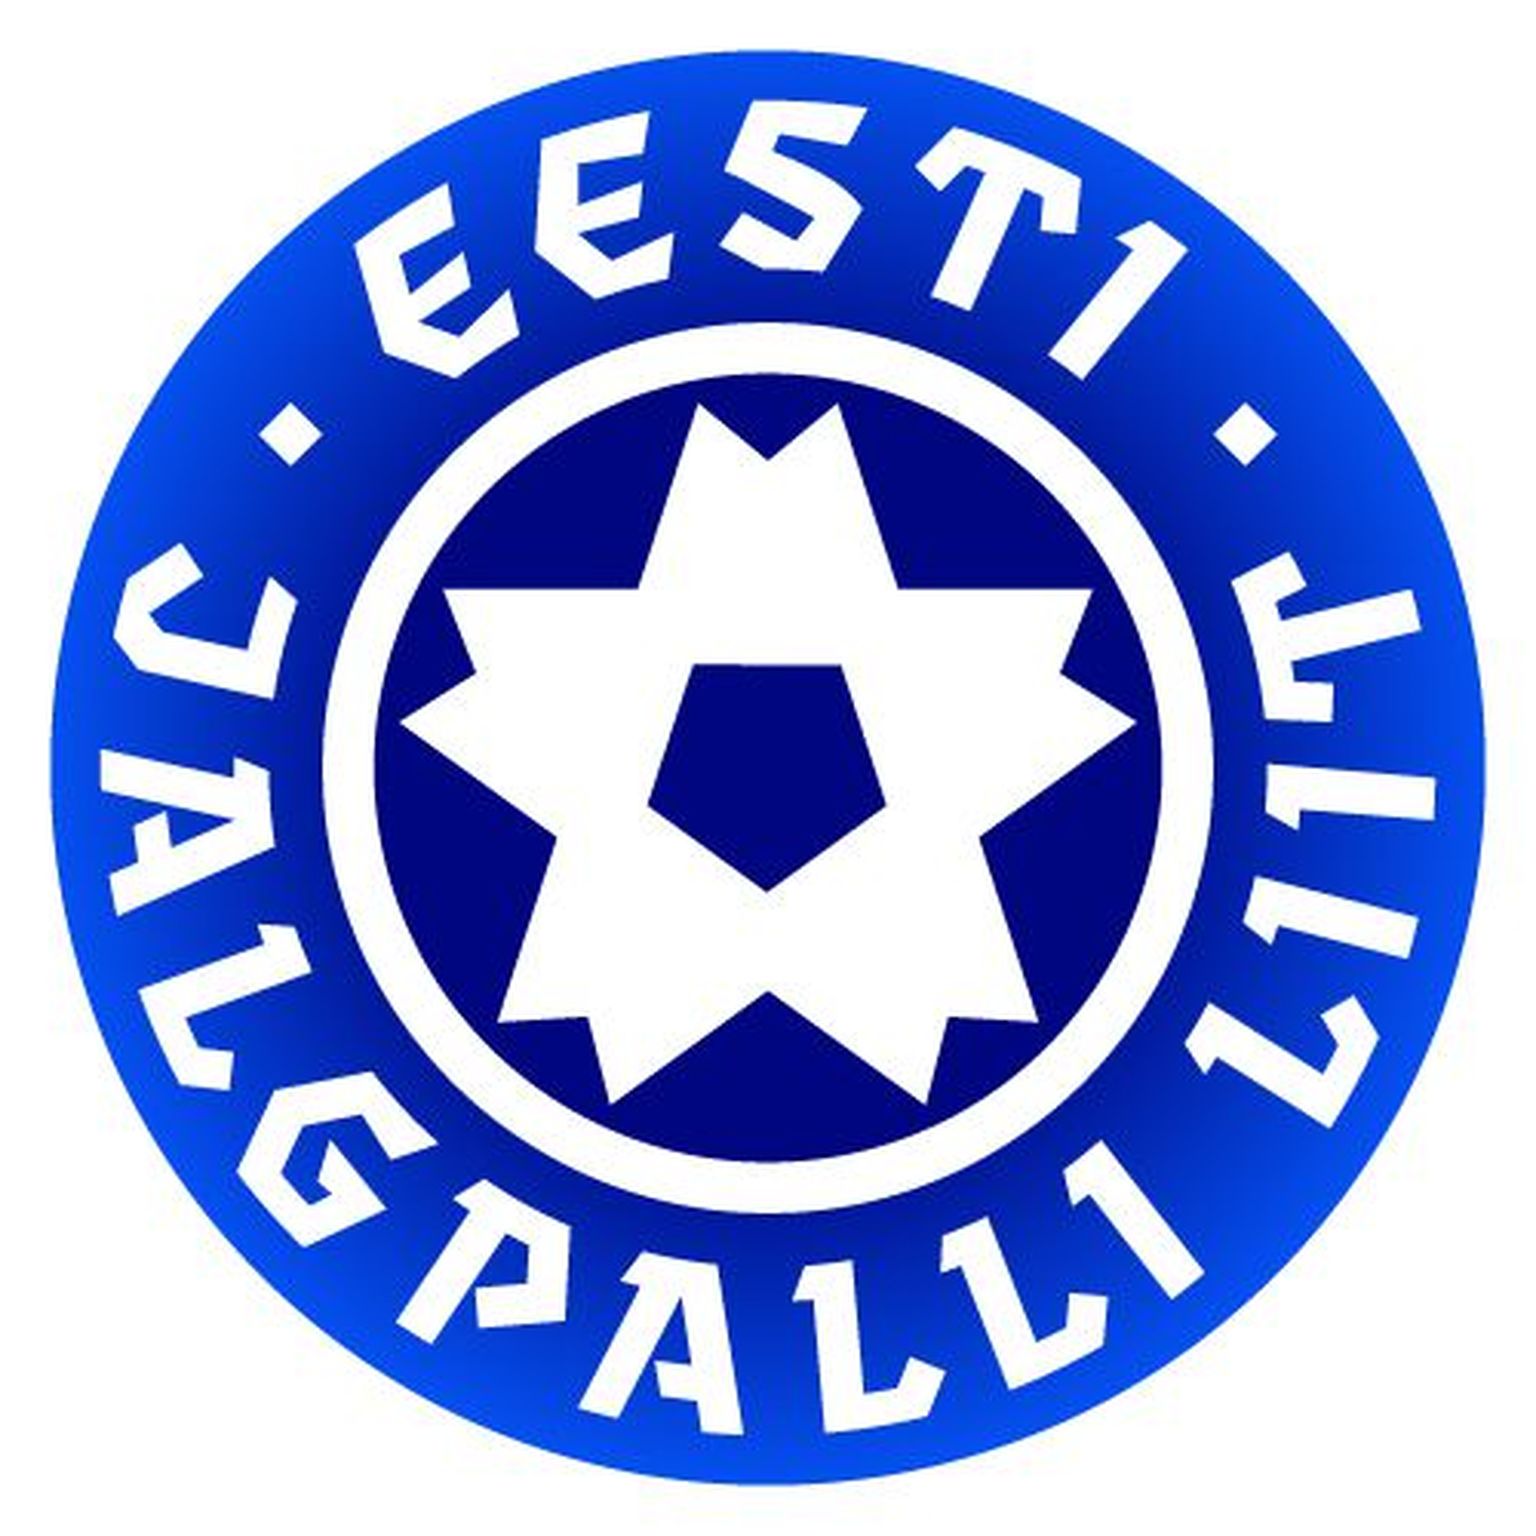 Eesti Jalgpalli Liidu logo.